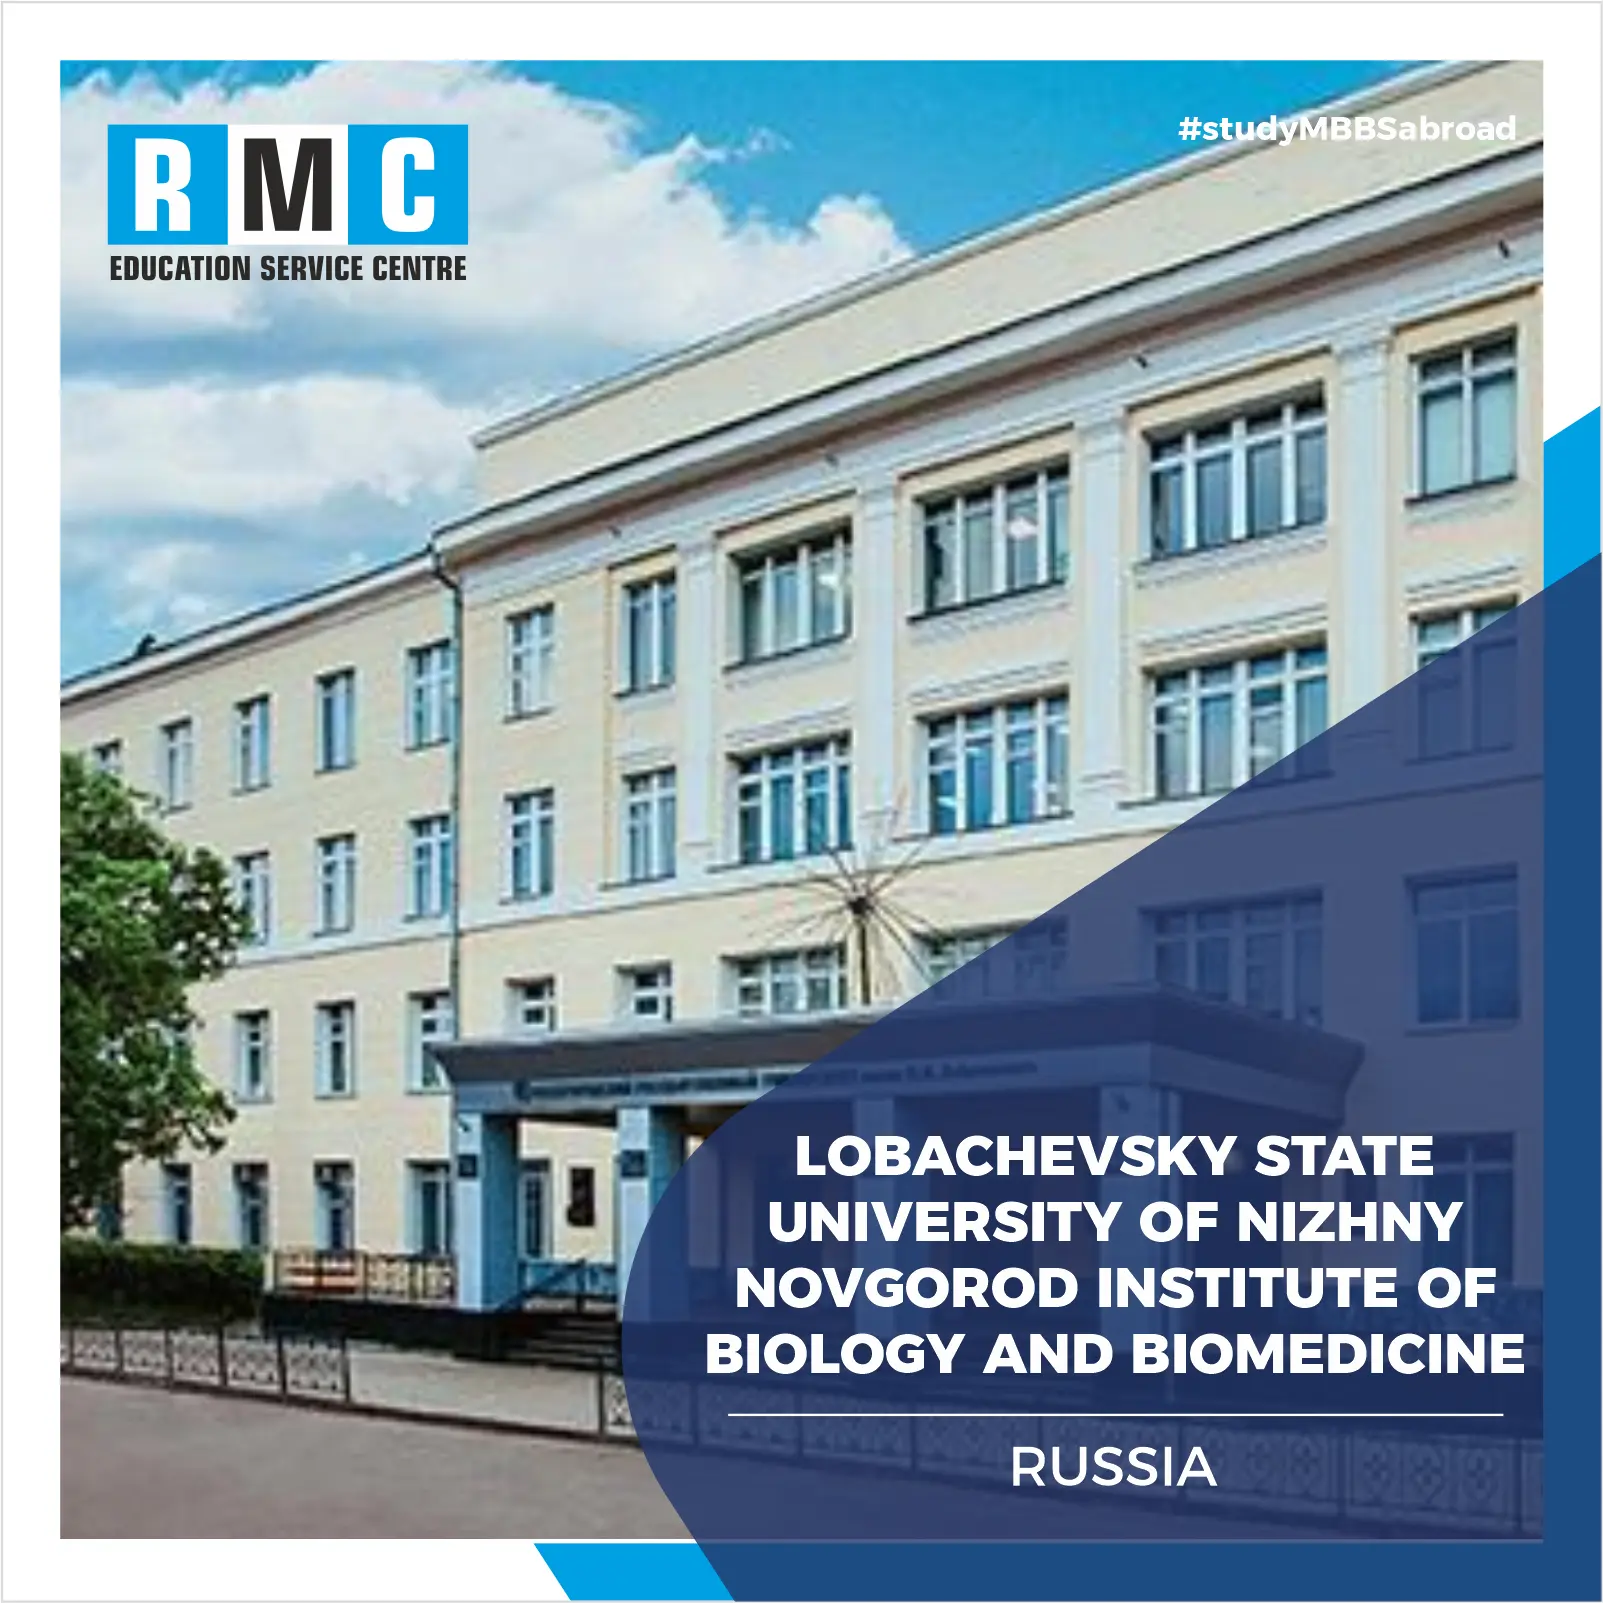 Lobachevsky State University of Nizhny Novgorod Institute of Biology and Biomedicine